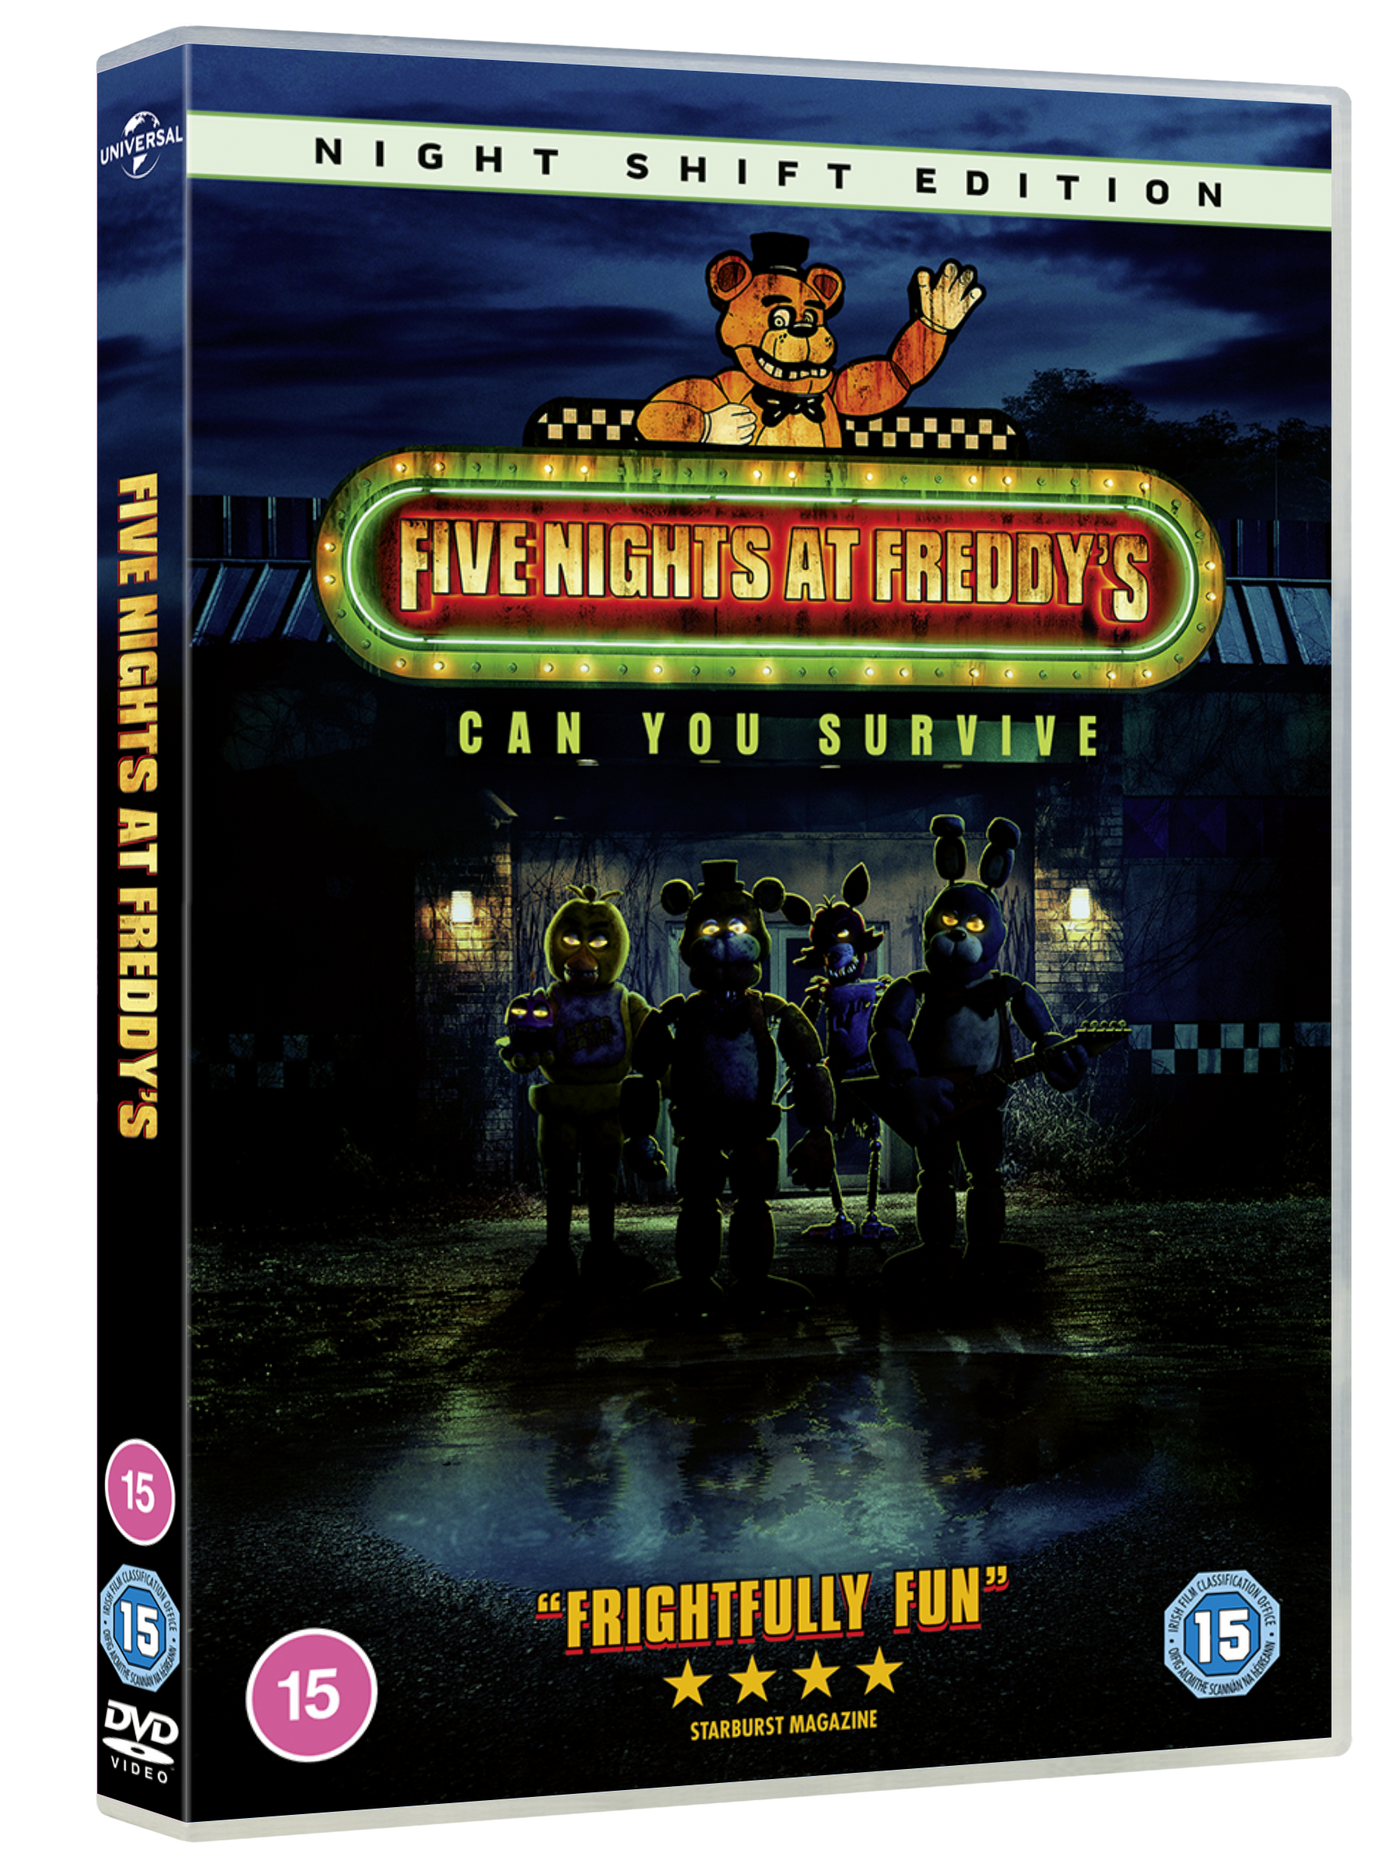 Five Nights at Freddy's [DVD] [2023]